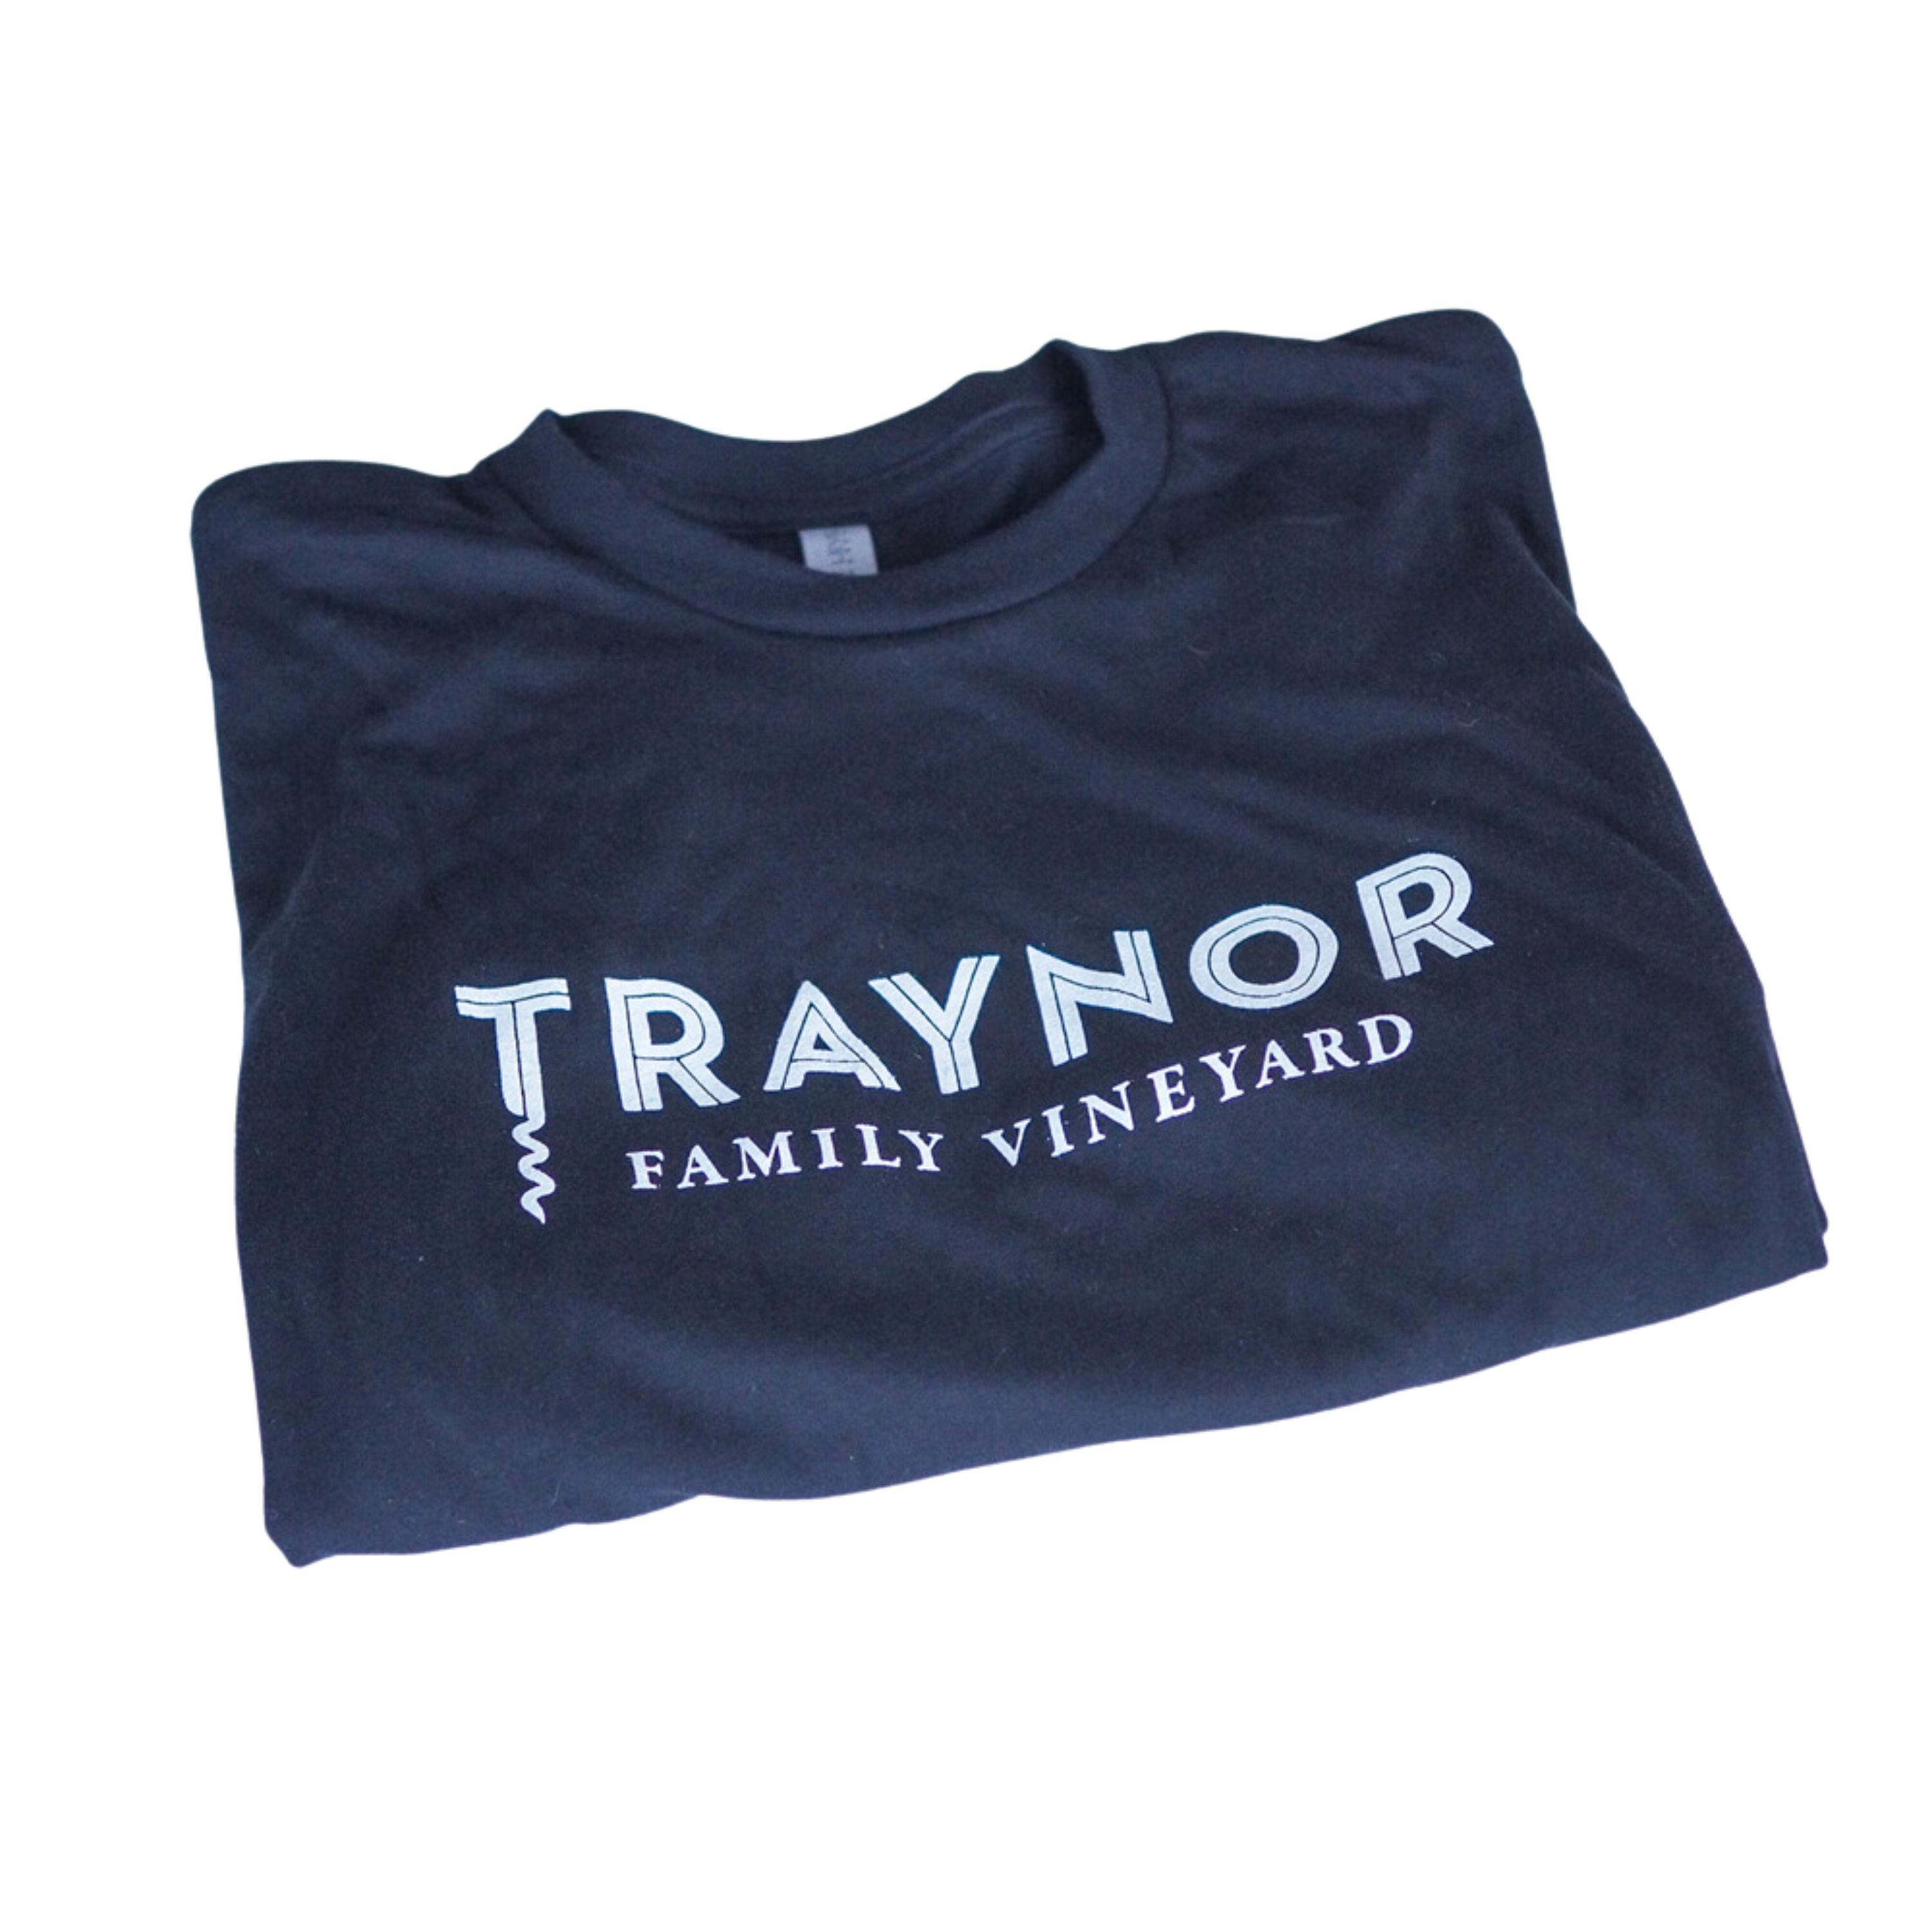 Traynor Family Vineyard T-Shirts - Vintage Logo